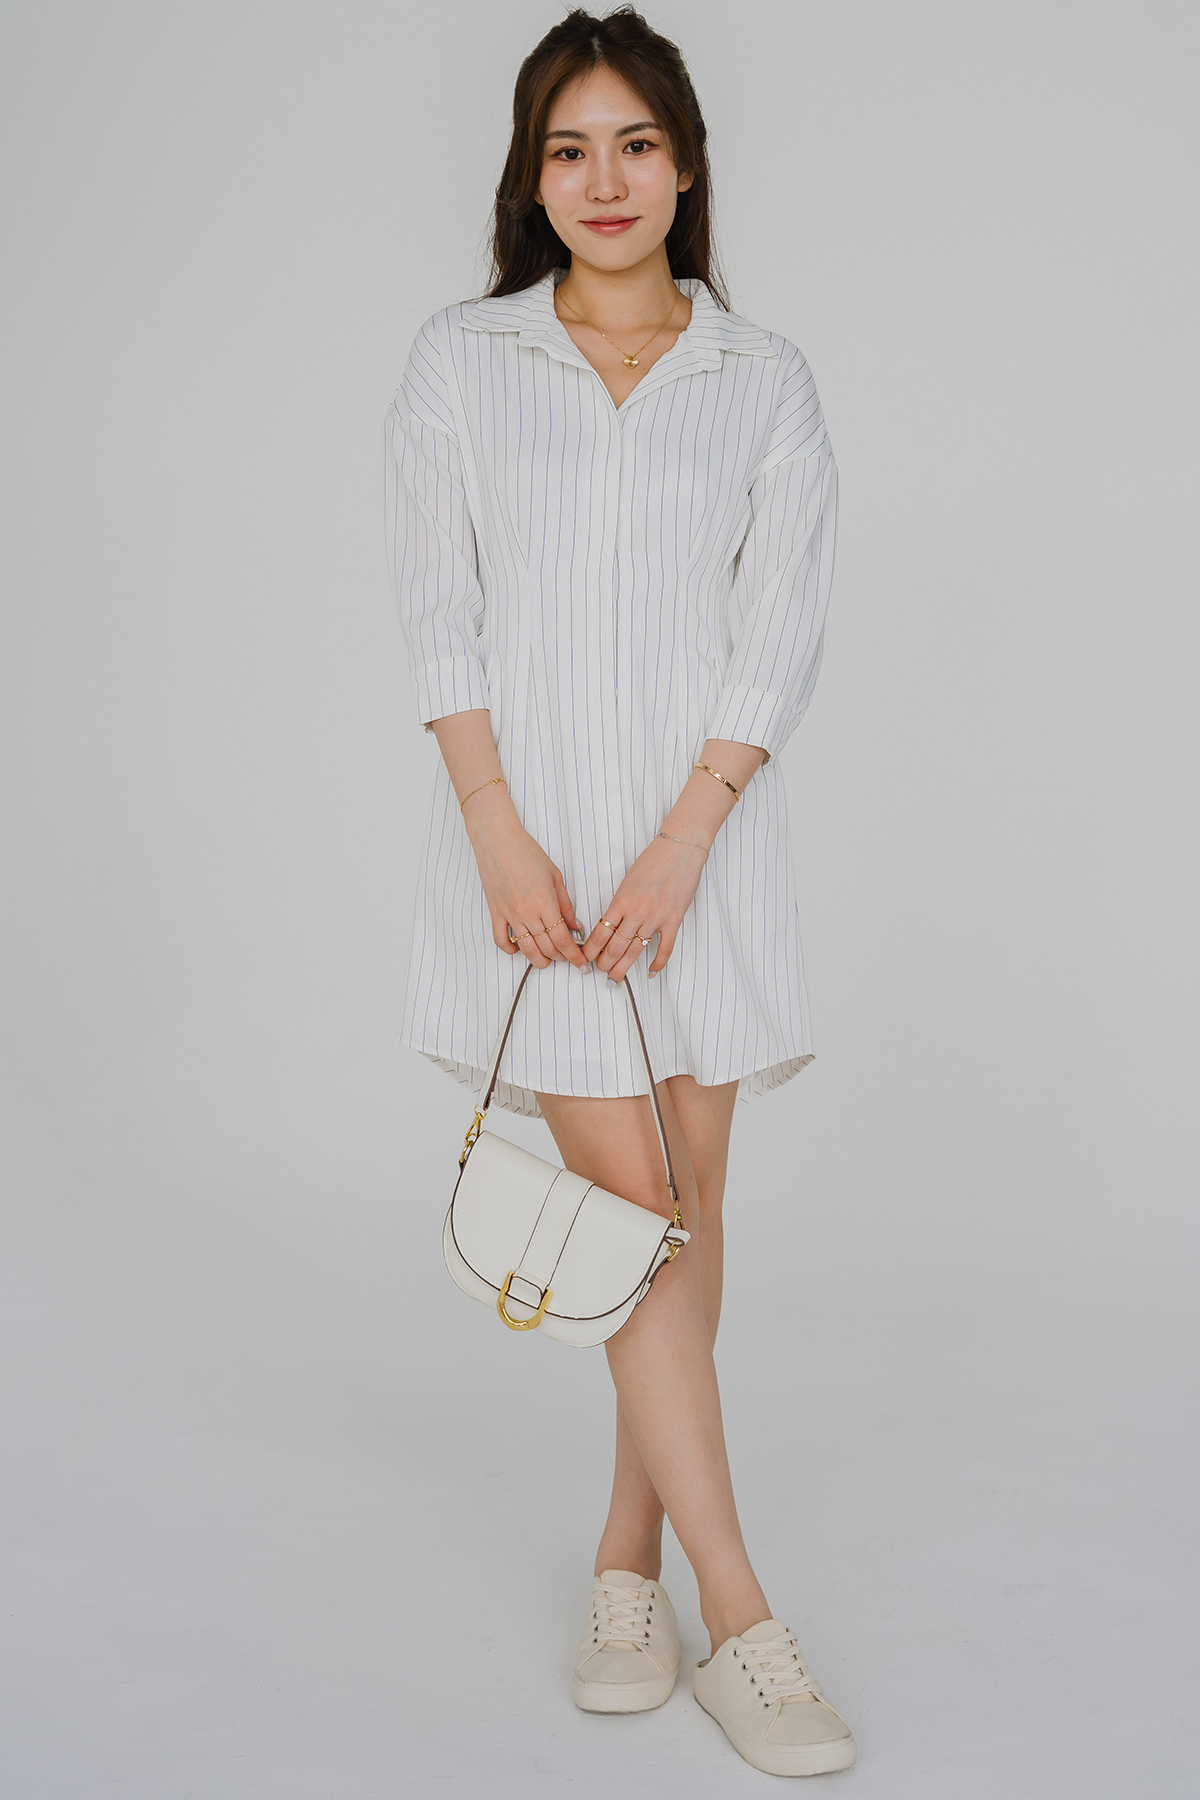 Essential Pinstripe Shirt Dress (White)